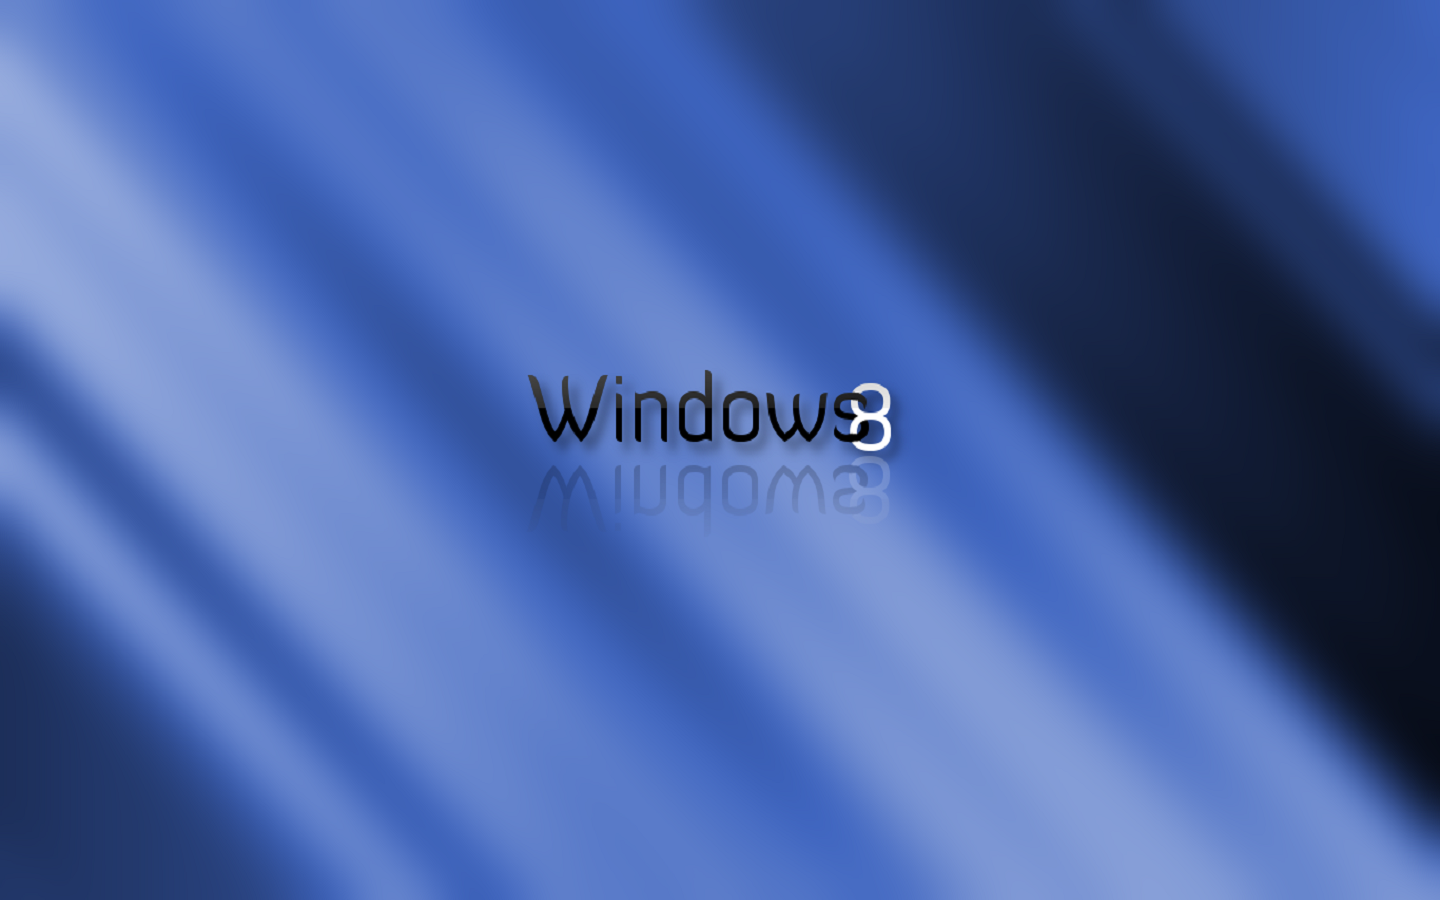 Name Windows Wallpaper Image Genre Window